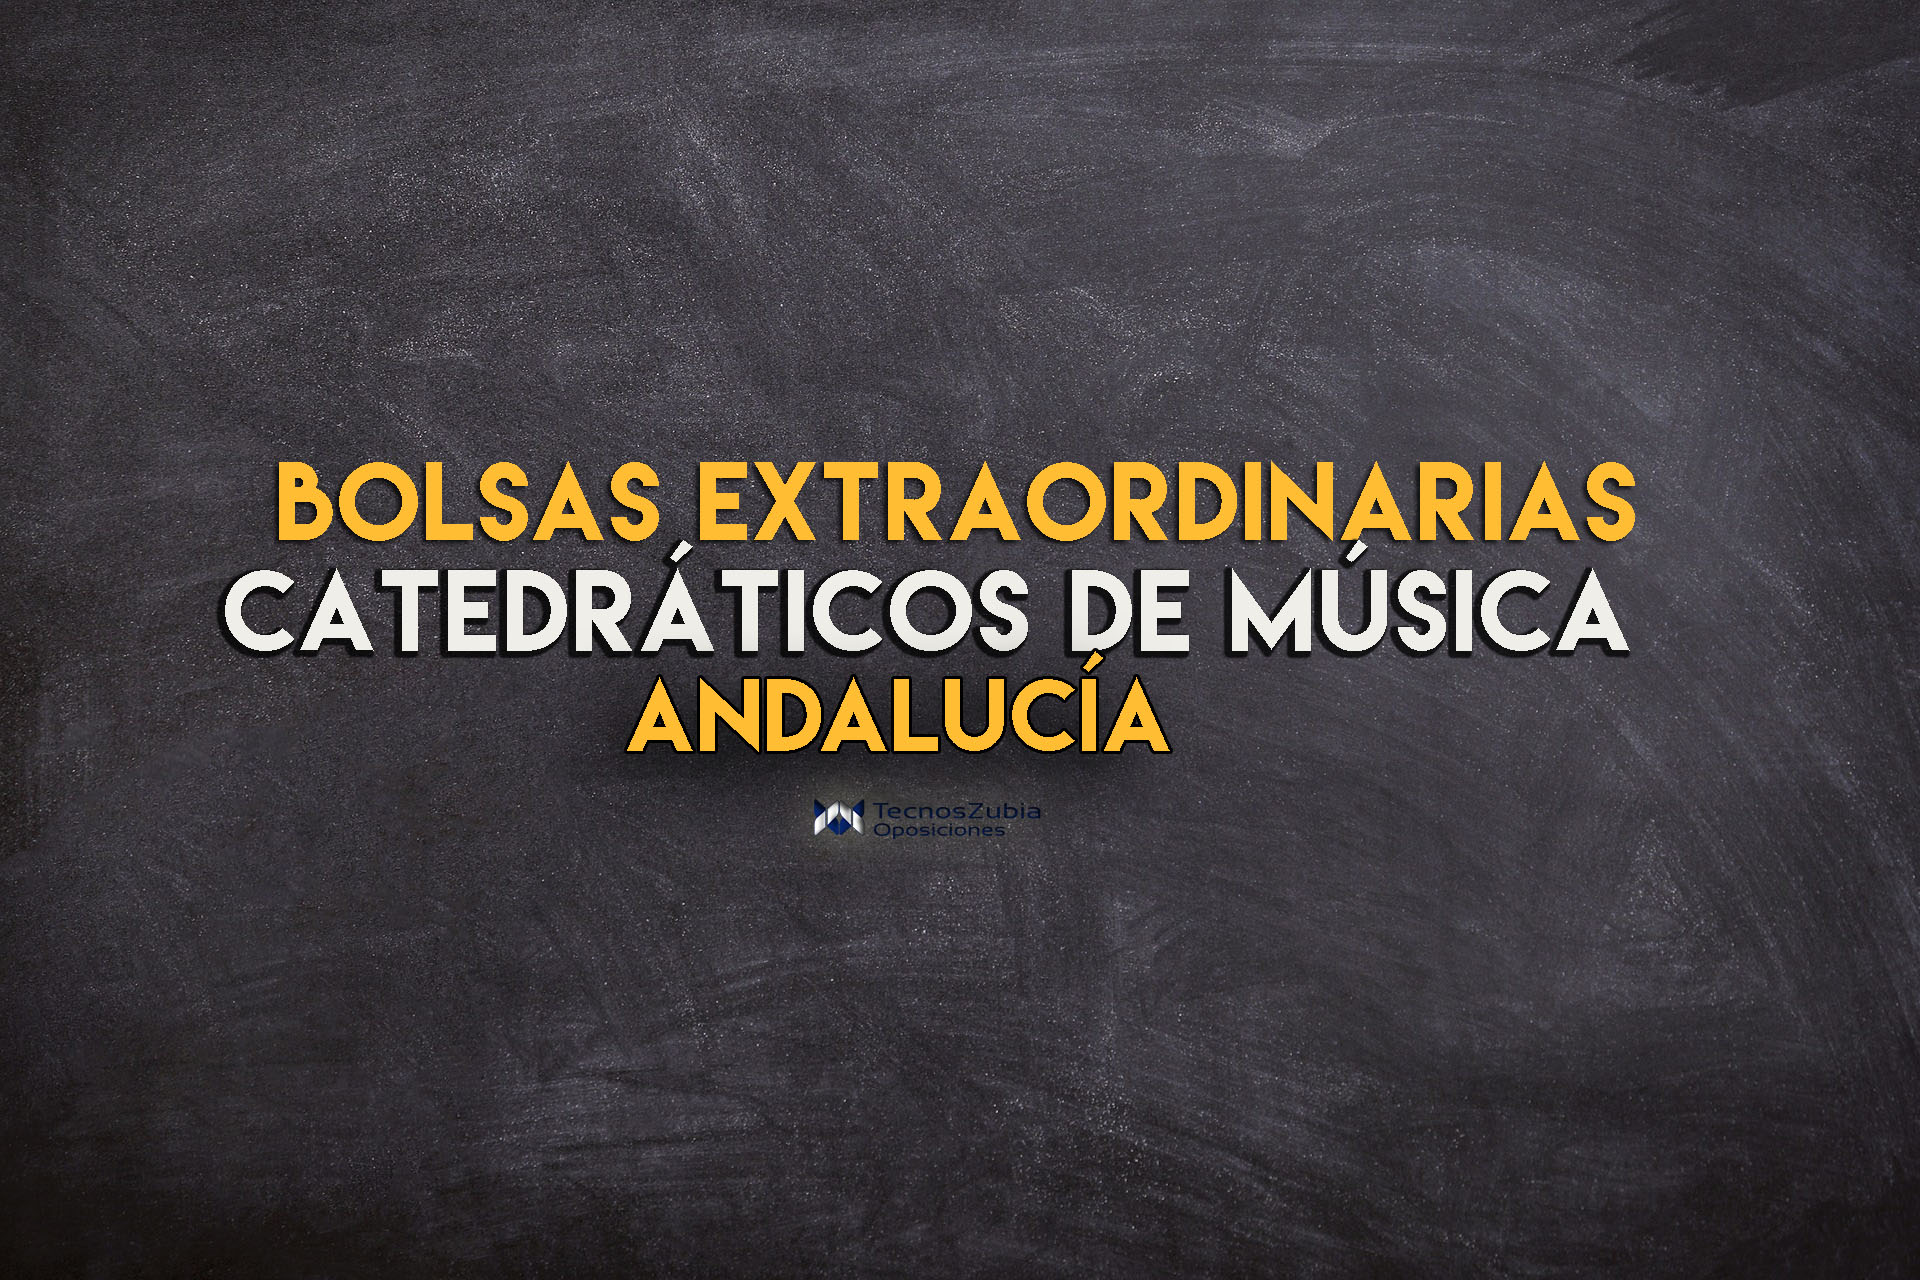 Bolsas extraordinarias catedráticos de música Andalucía